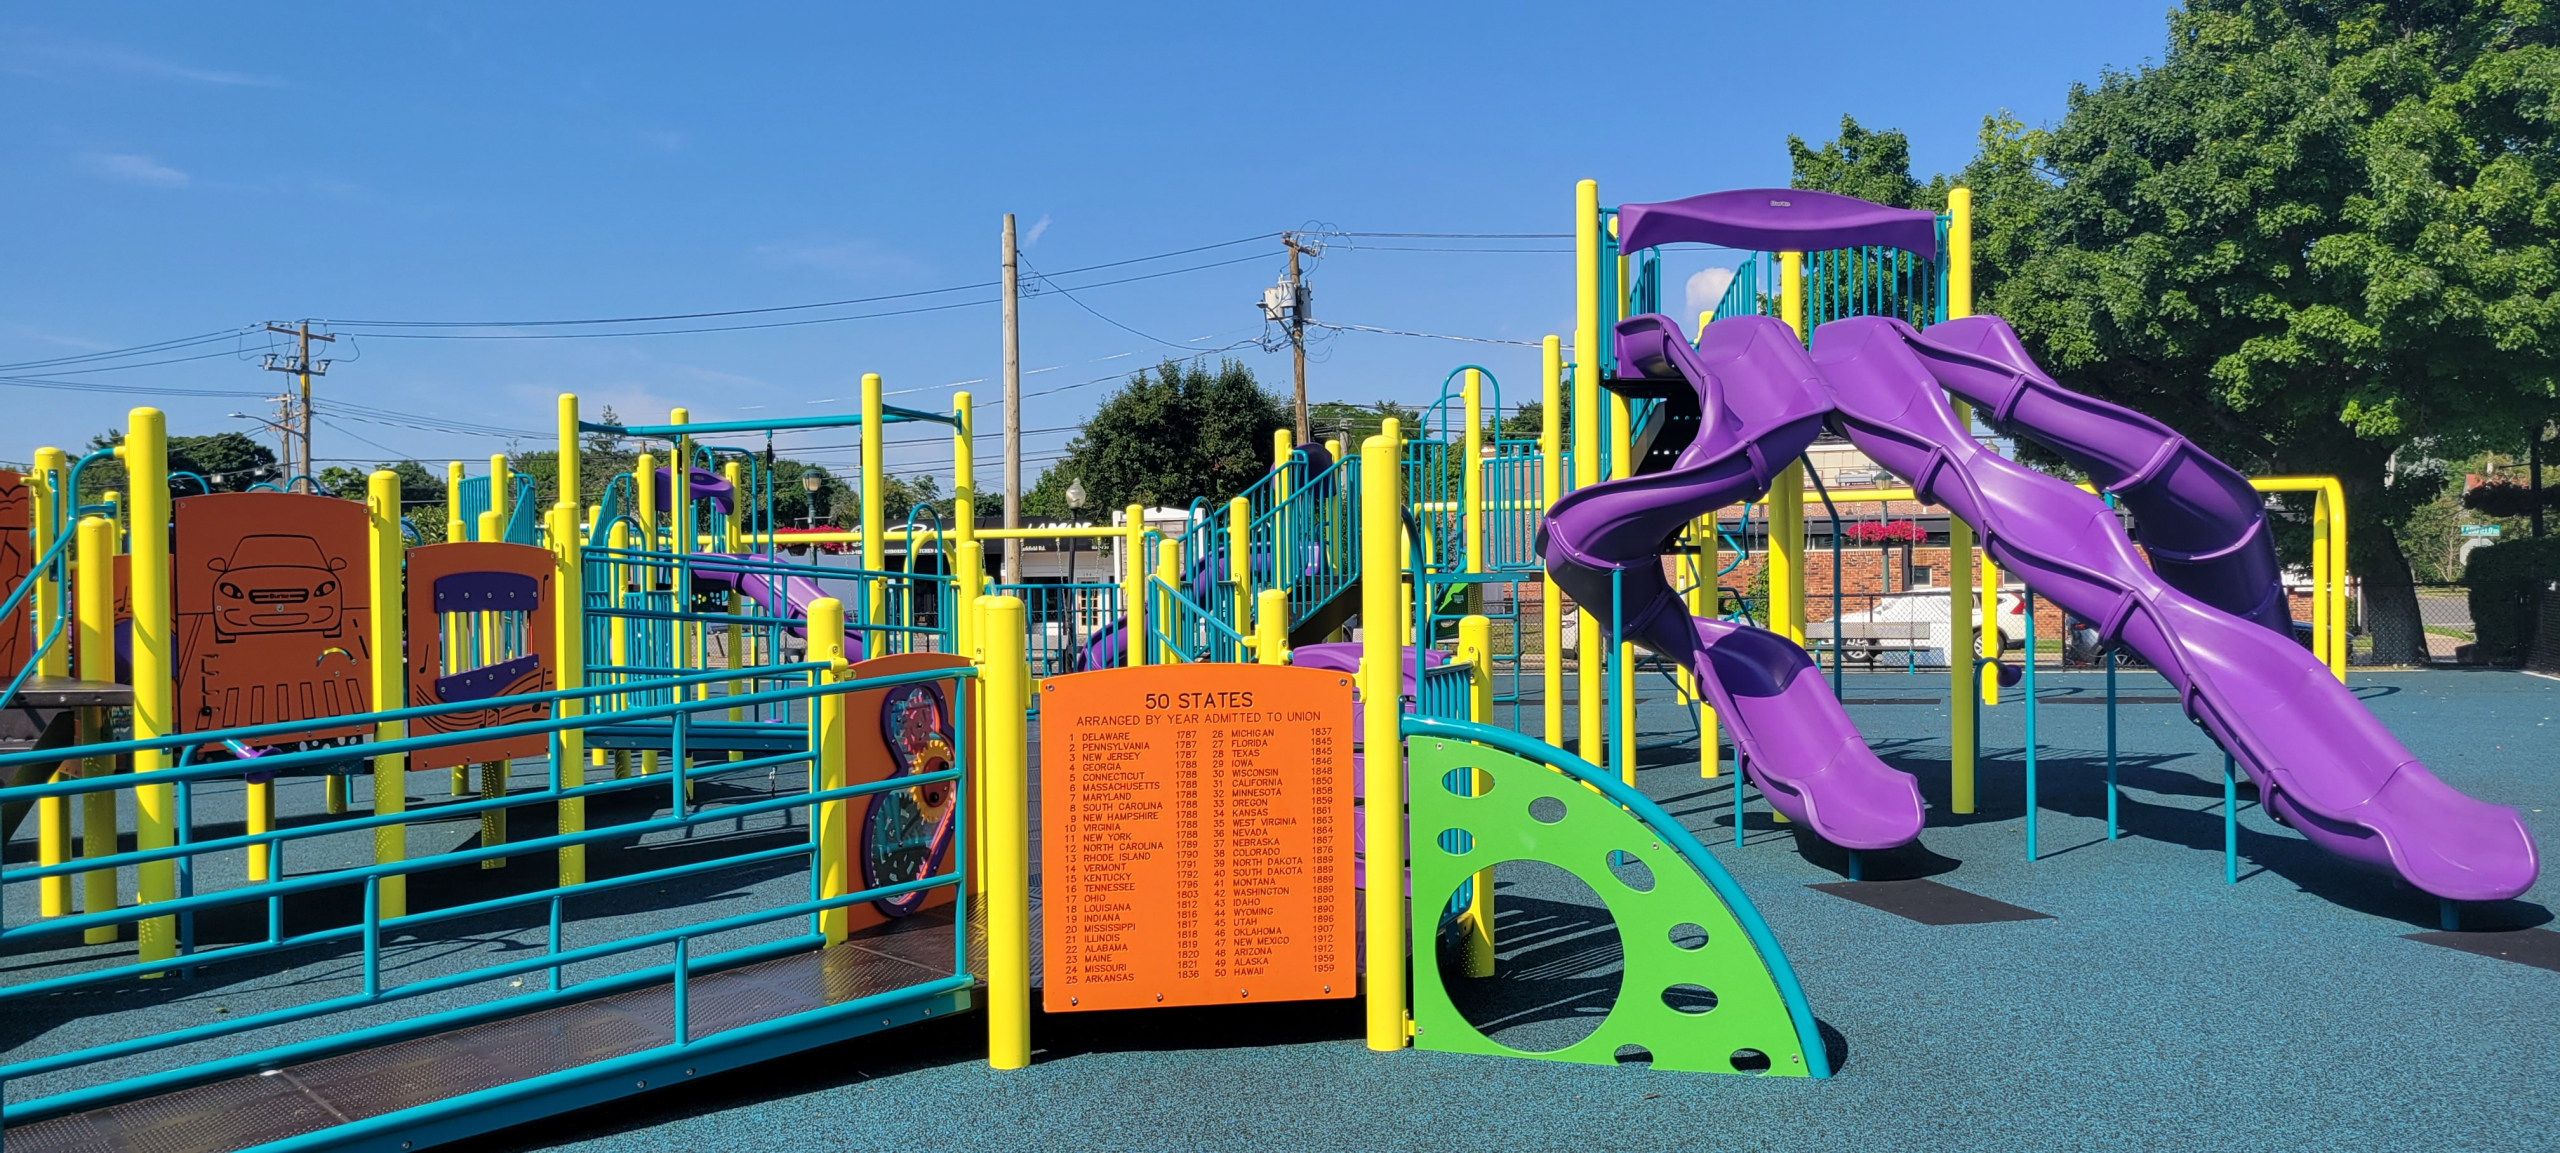 Huntington Town dedicates playground to slain mother and child